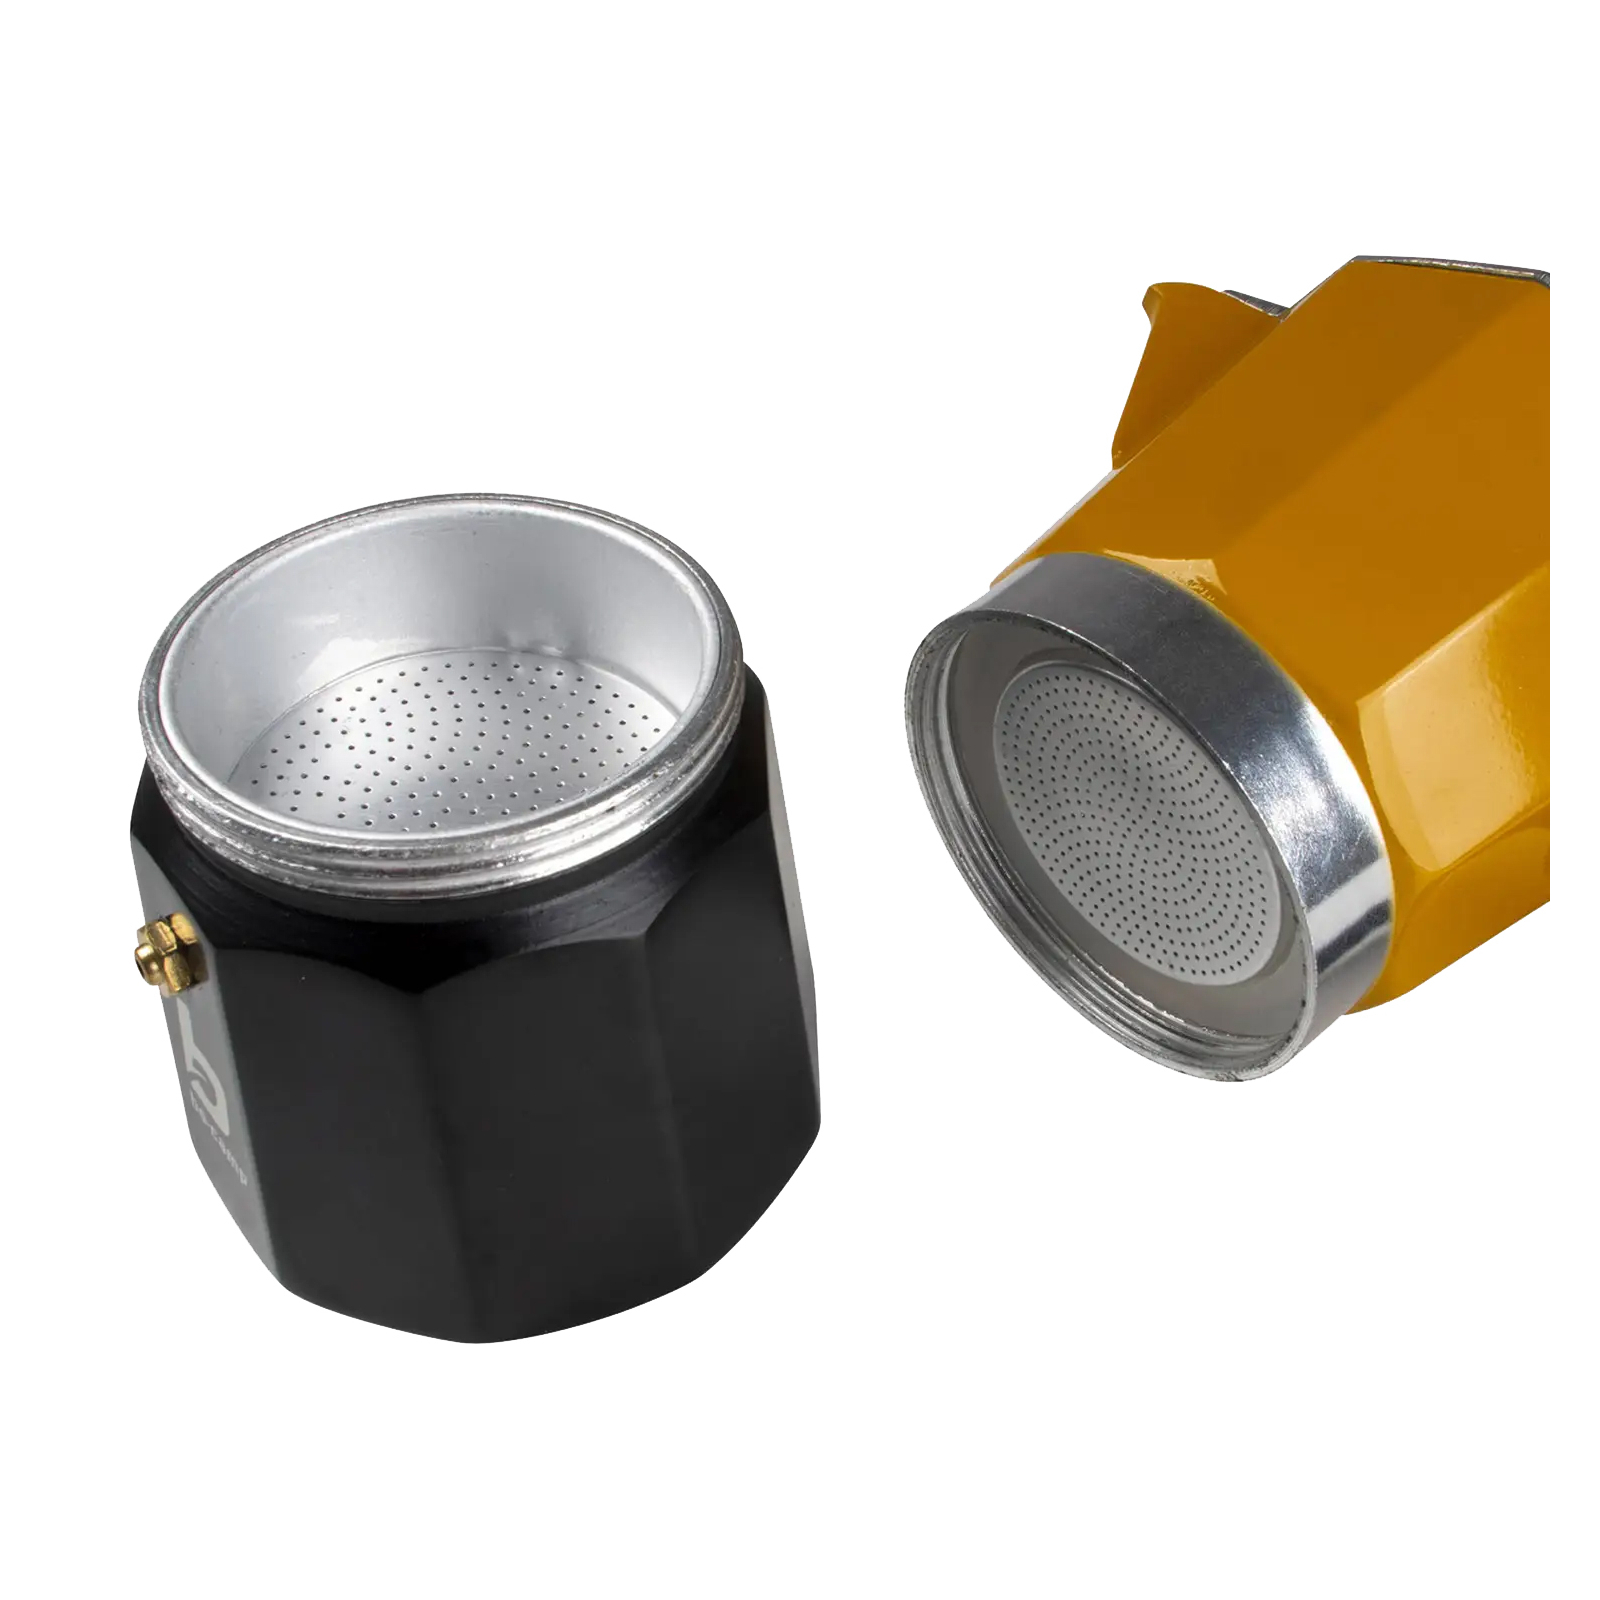 Гейзерная кофеварка Bo-Camp Hudson 3-cups Yellow/Black (2200518) изображение 3